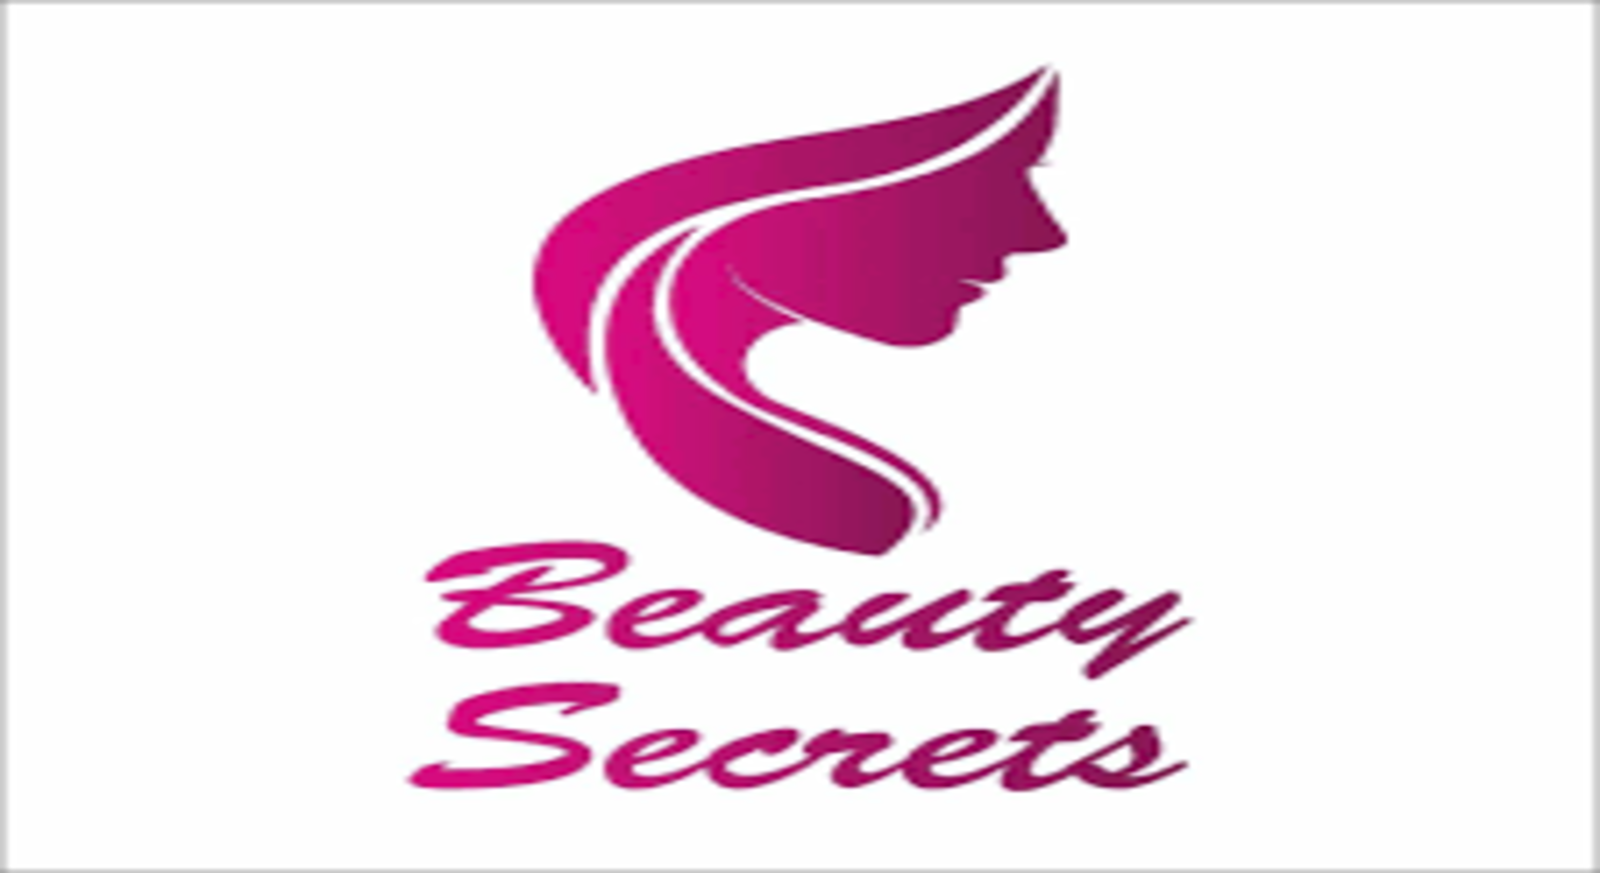 Beauty secrets